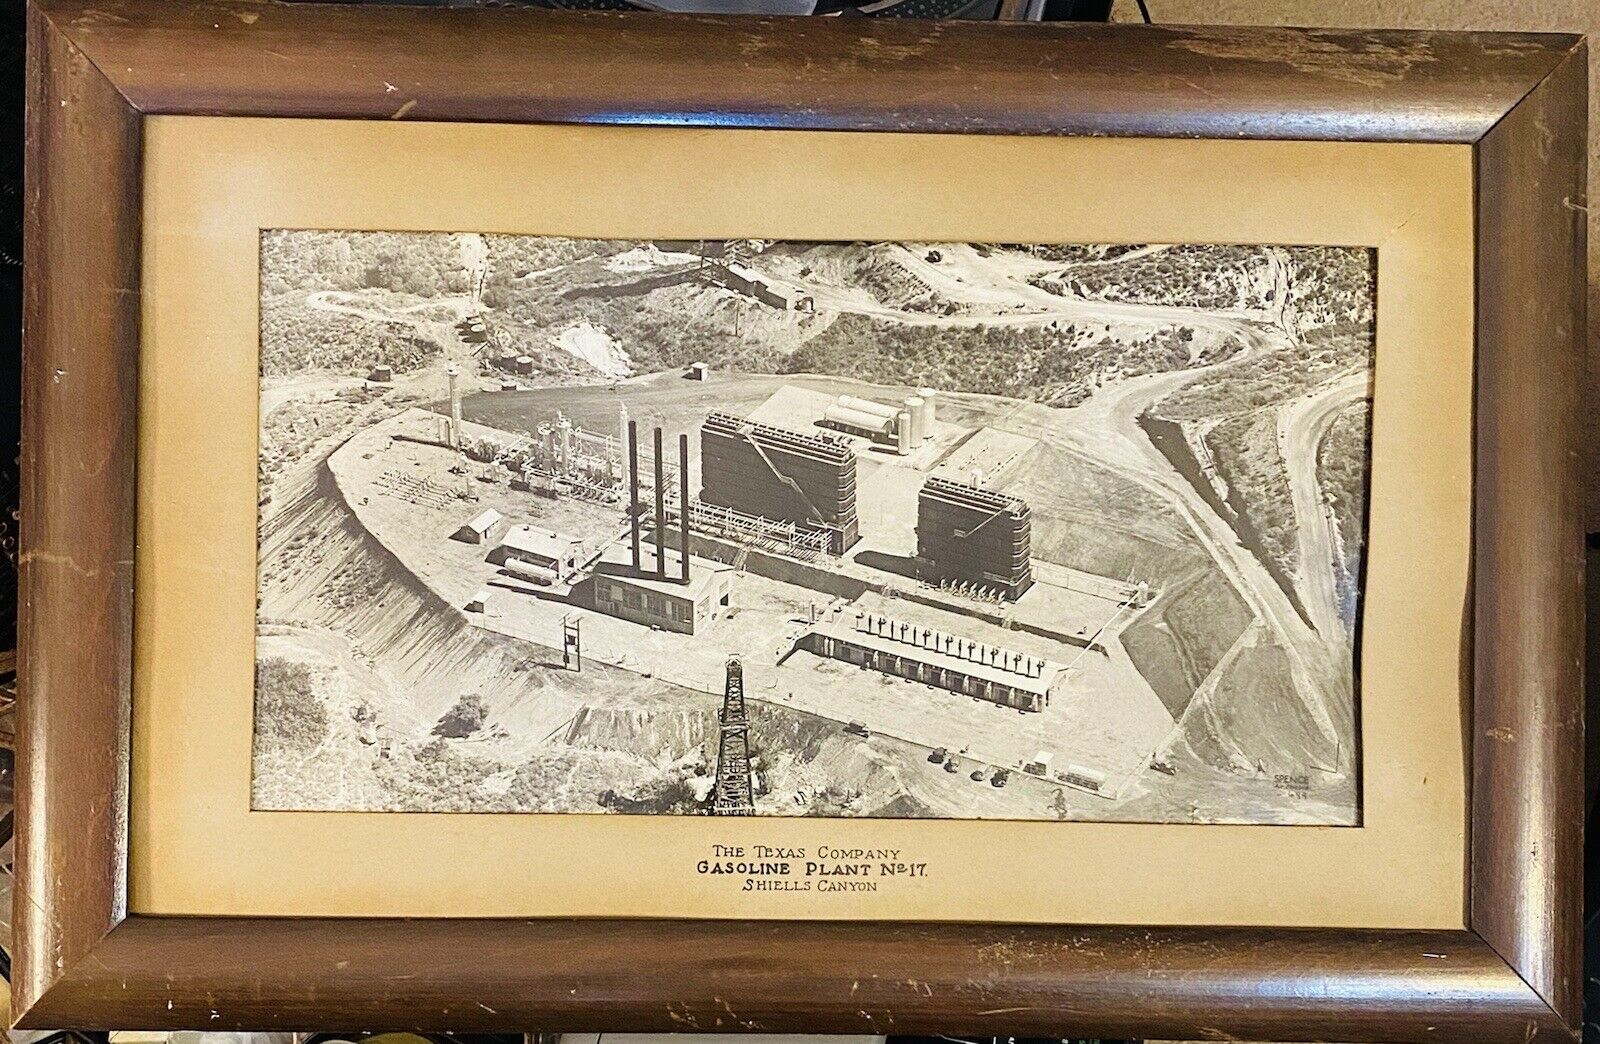 ANTIQUE Texas Co. Later Texaco Chevron Shell SPENCE Air Photo Ventura Plant 1937